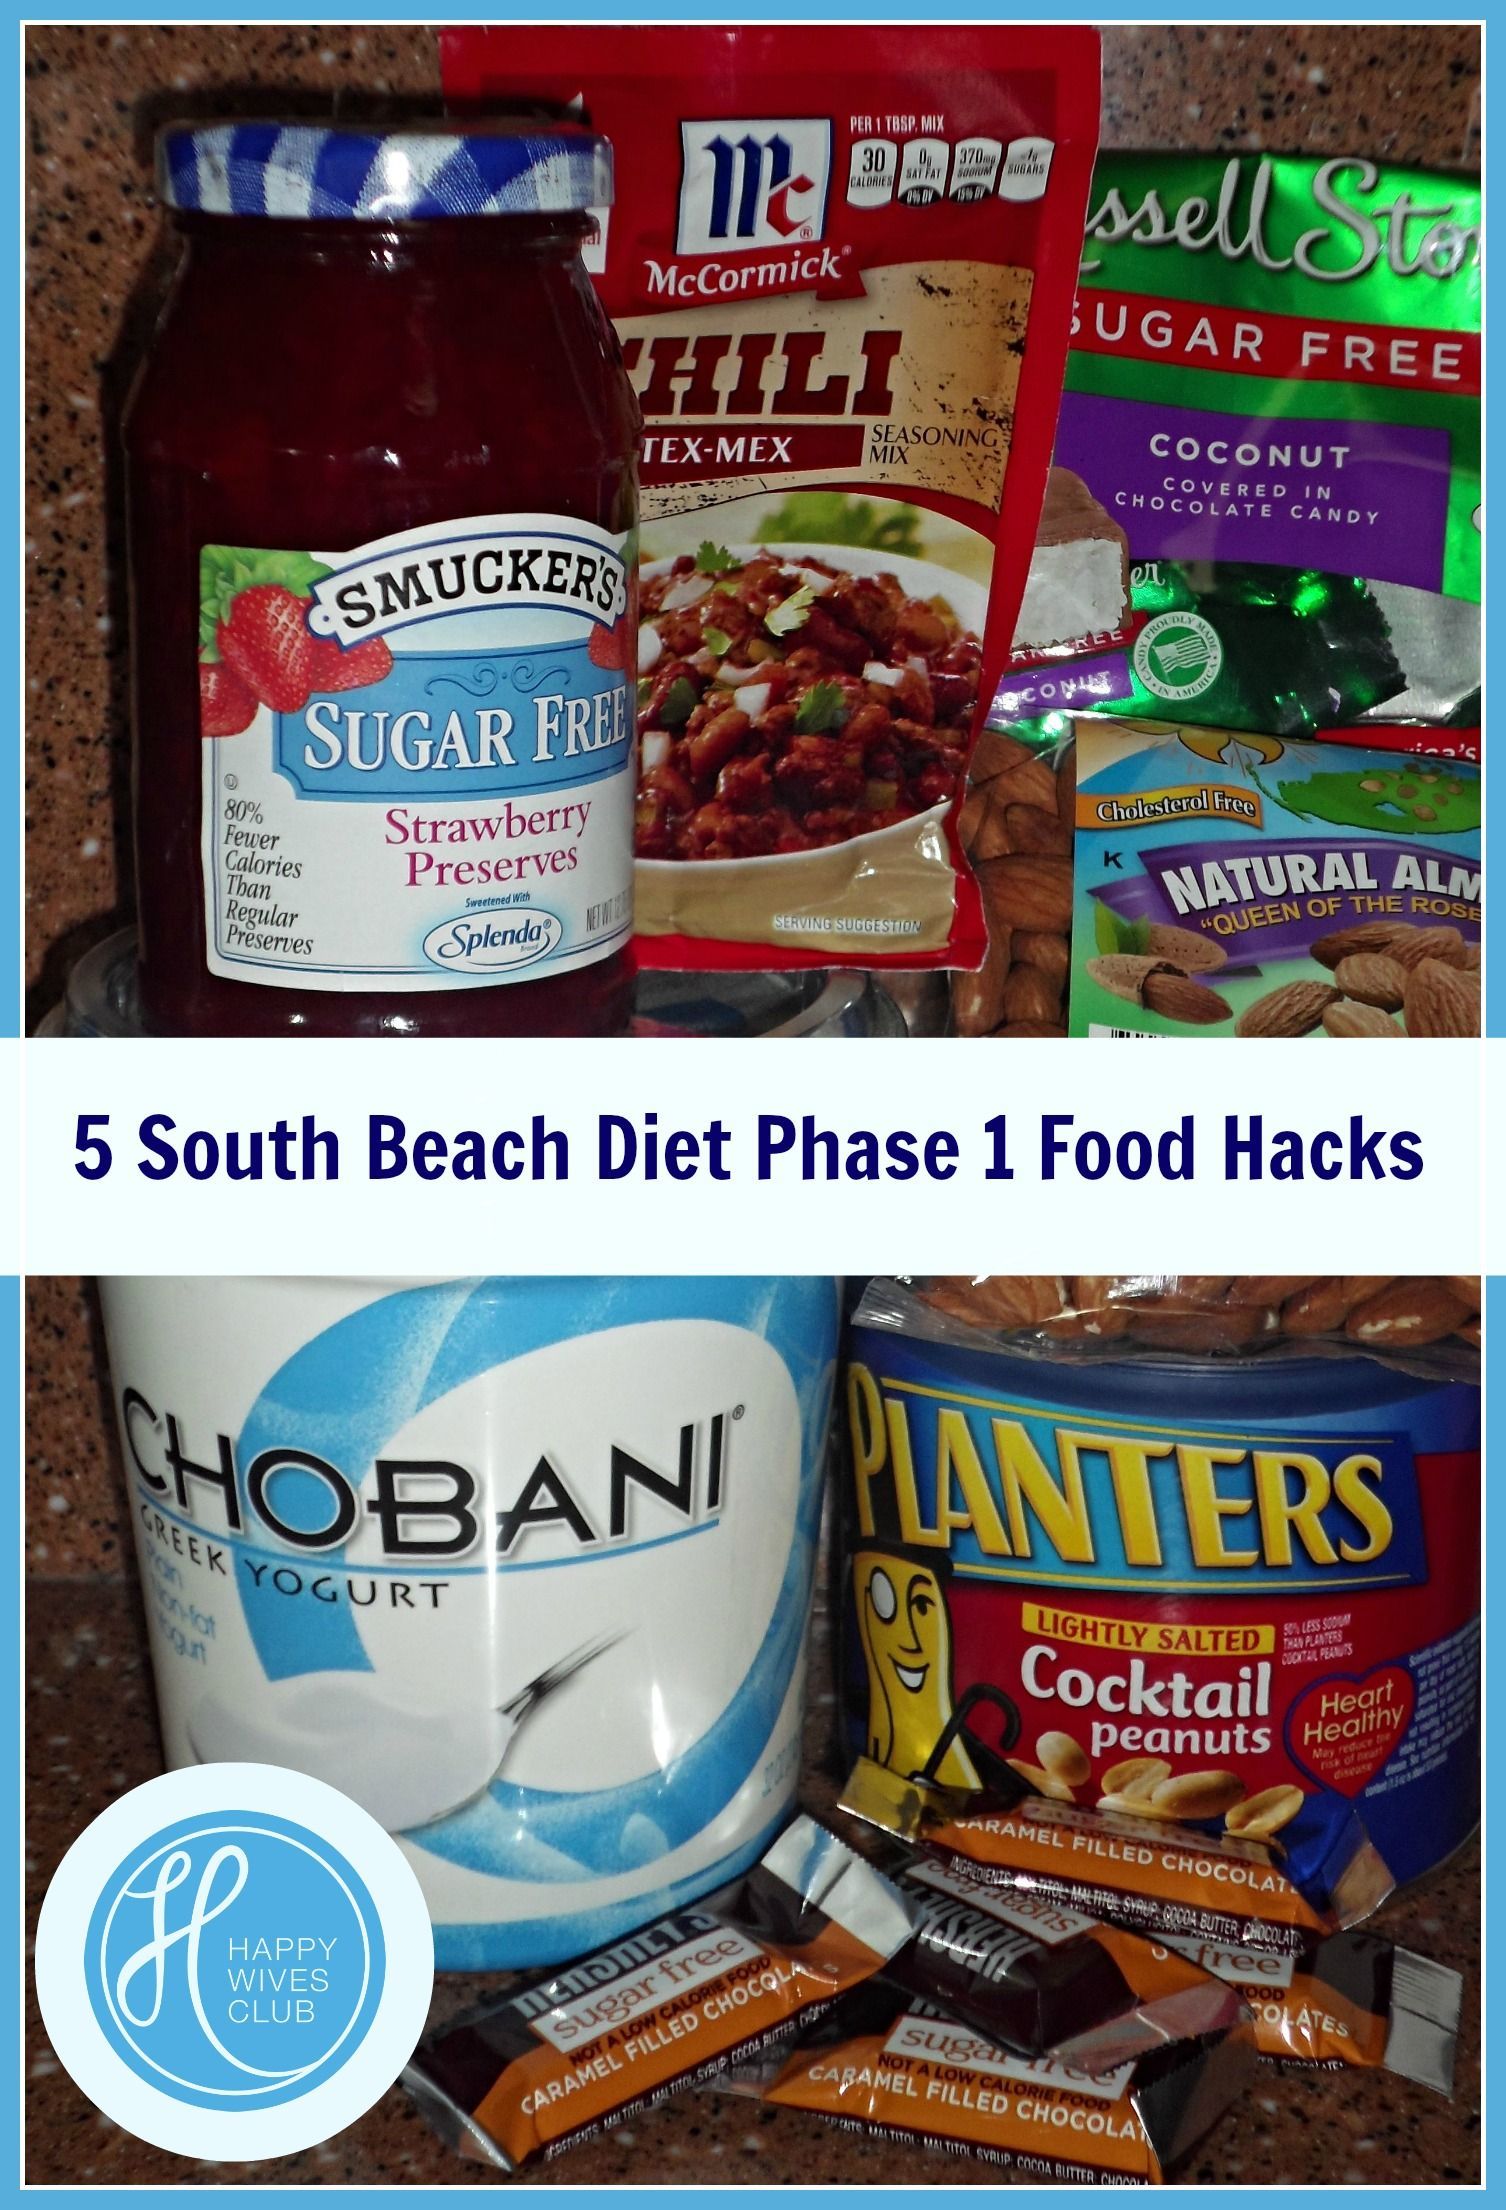 south beach diet phase 1 hacks (breakfast yogurt)